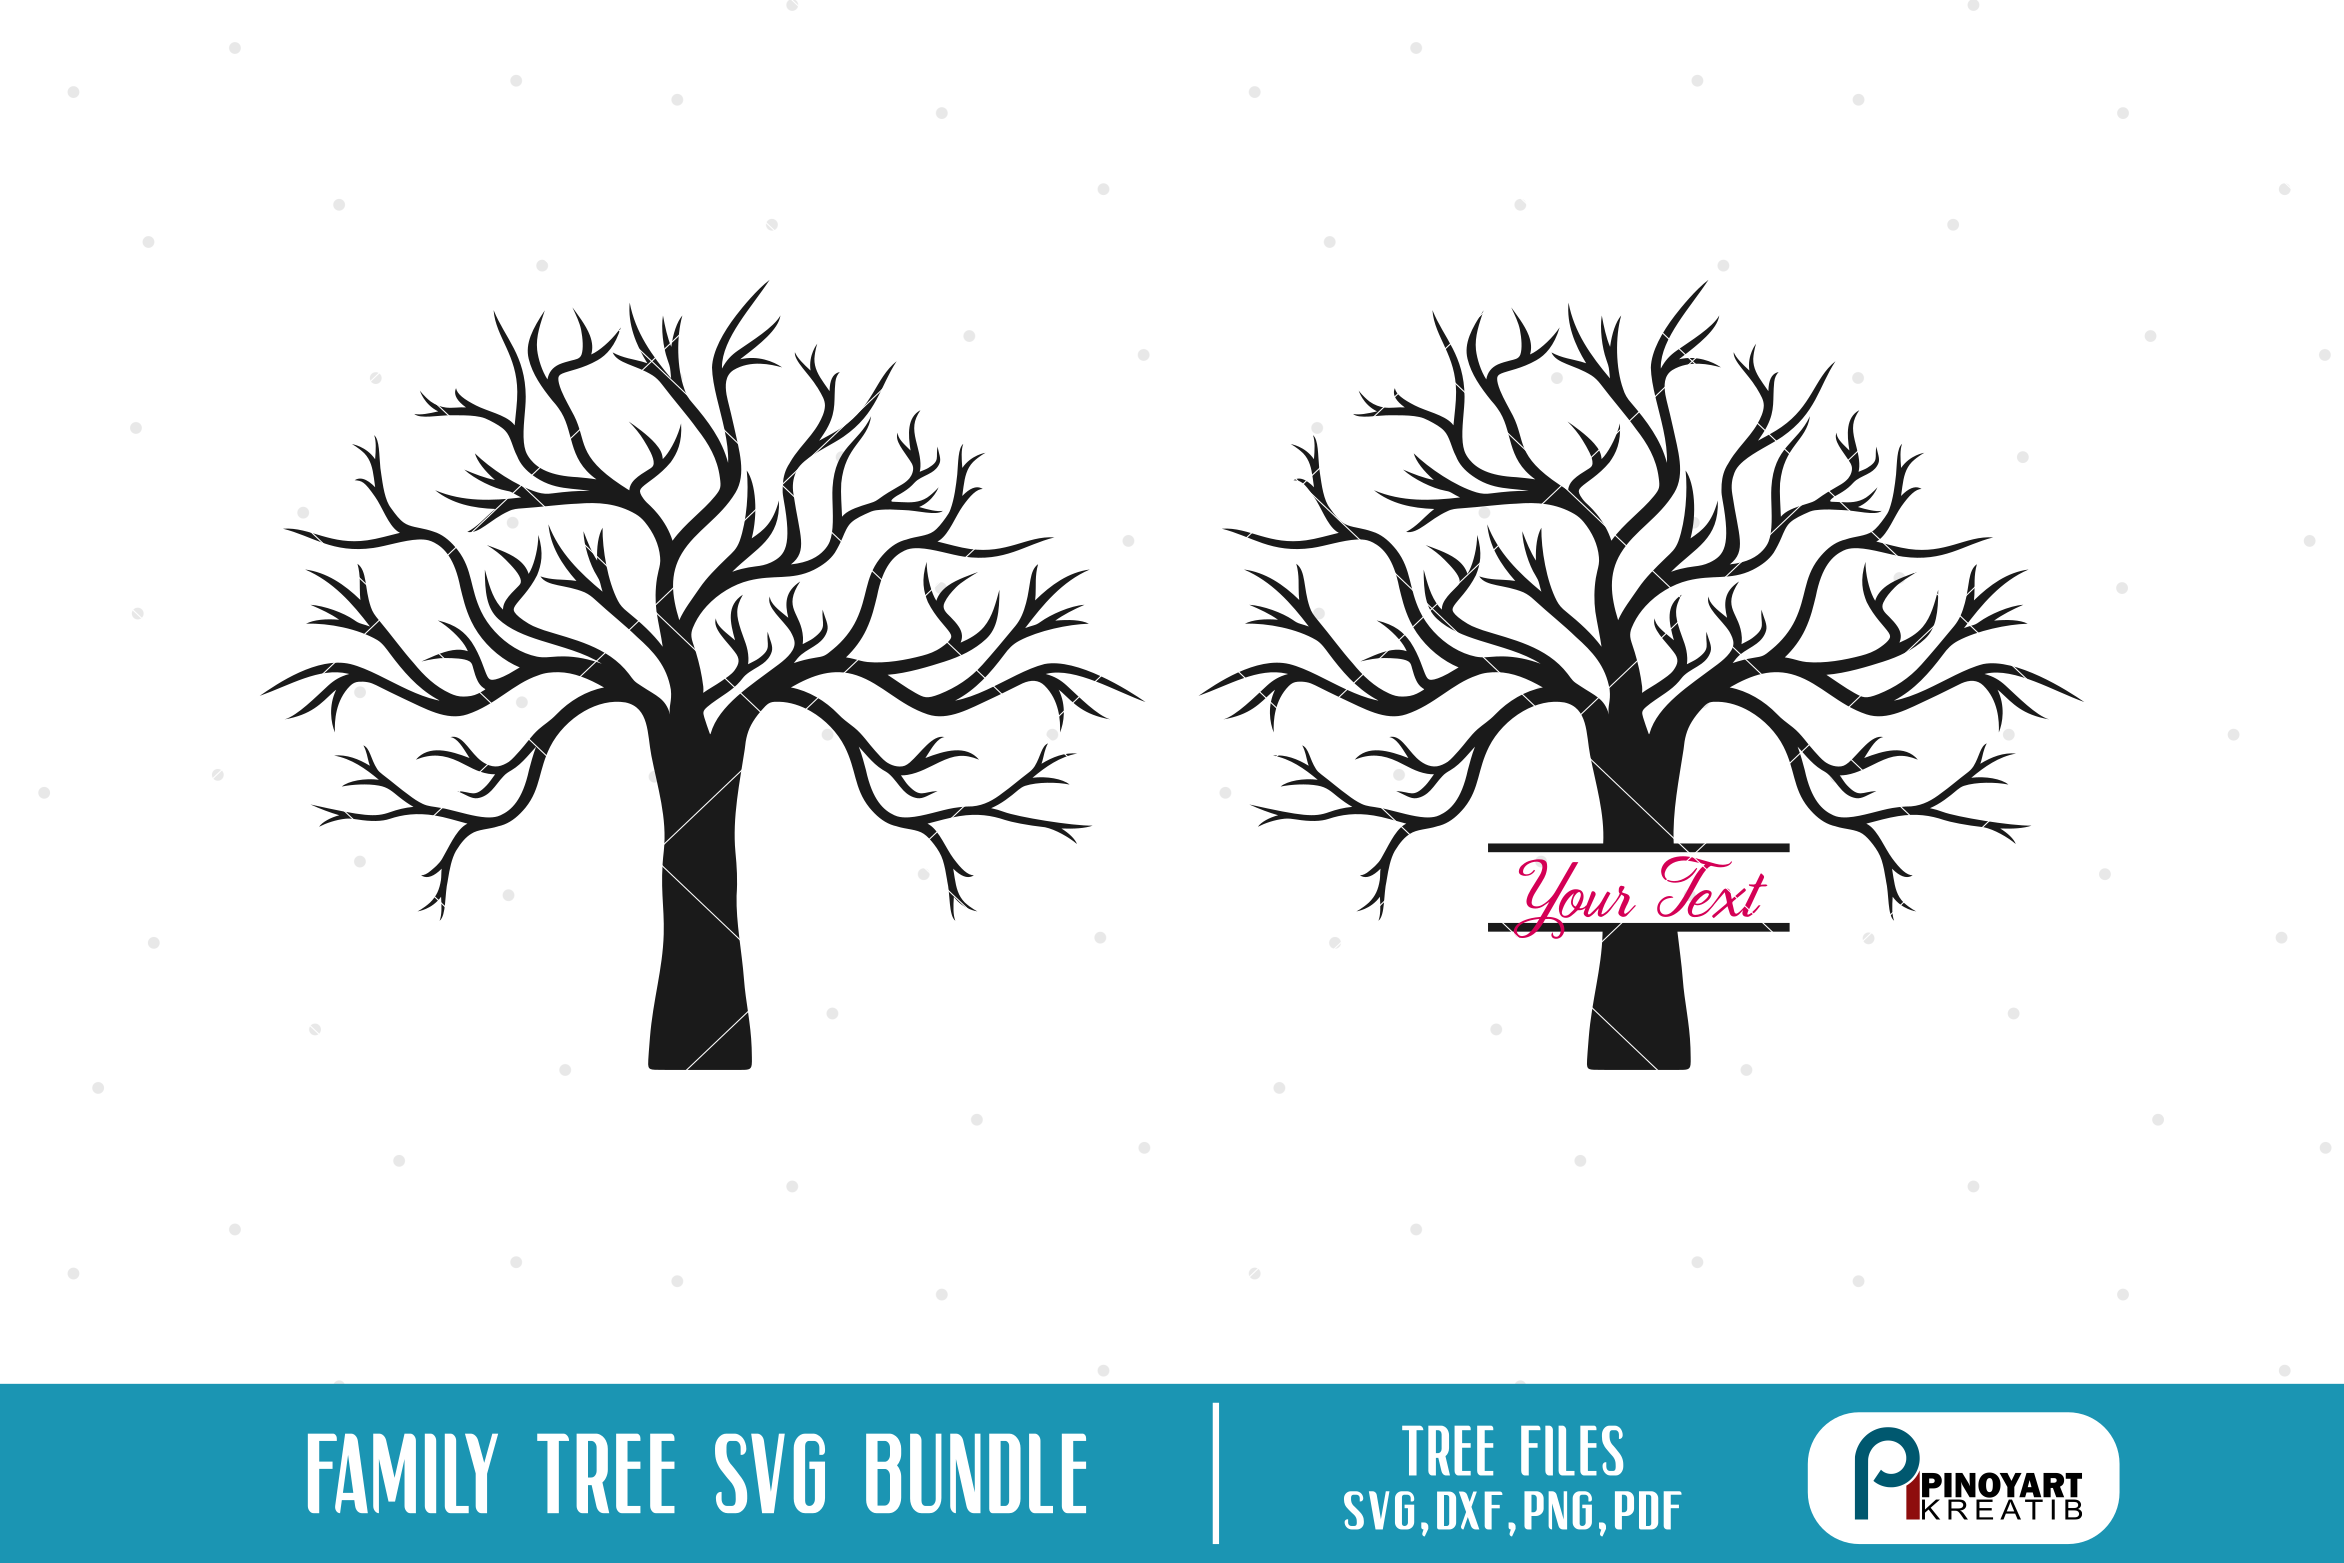 Download Family Tree SVG Bundle - 2 tree silhouette vectors